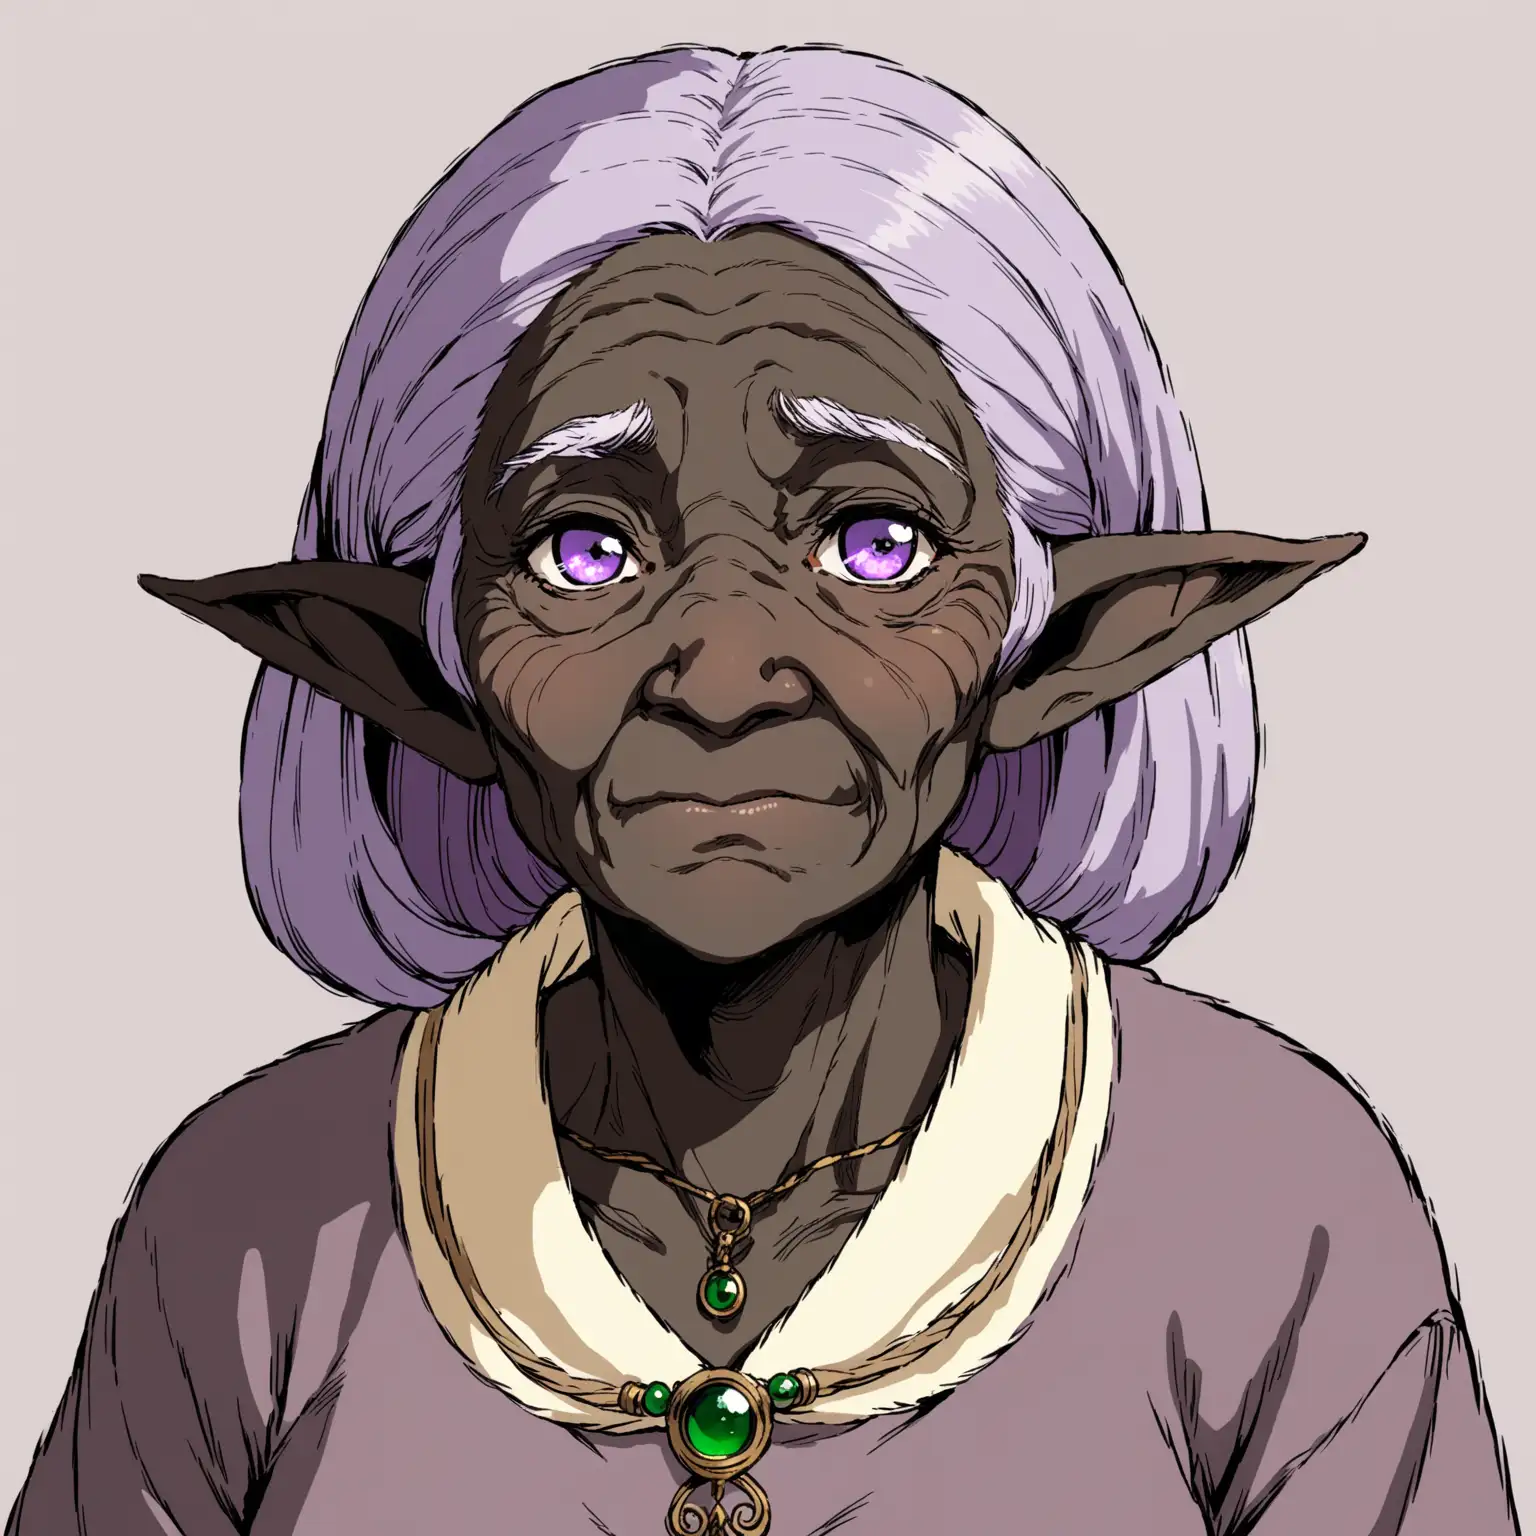 Wise Elderly Elf with Dark Skin and Purple Features in Ghibli Style